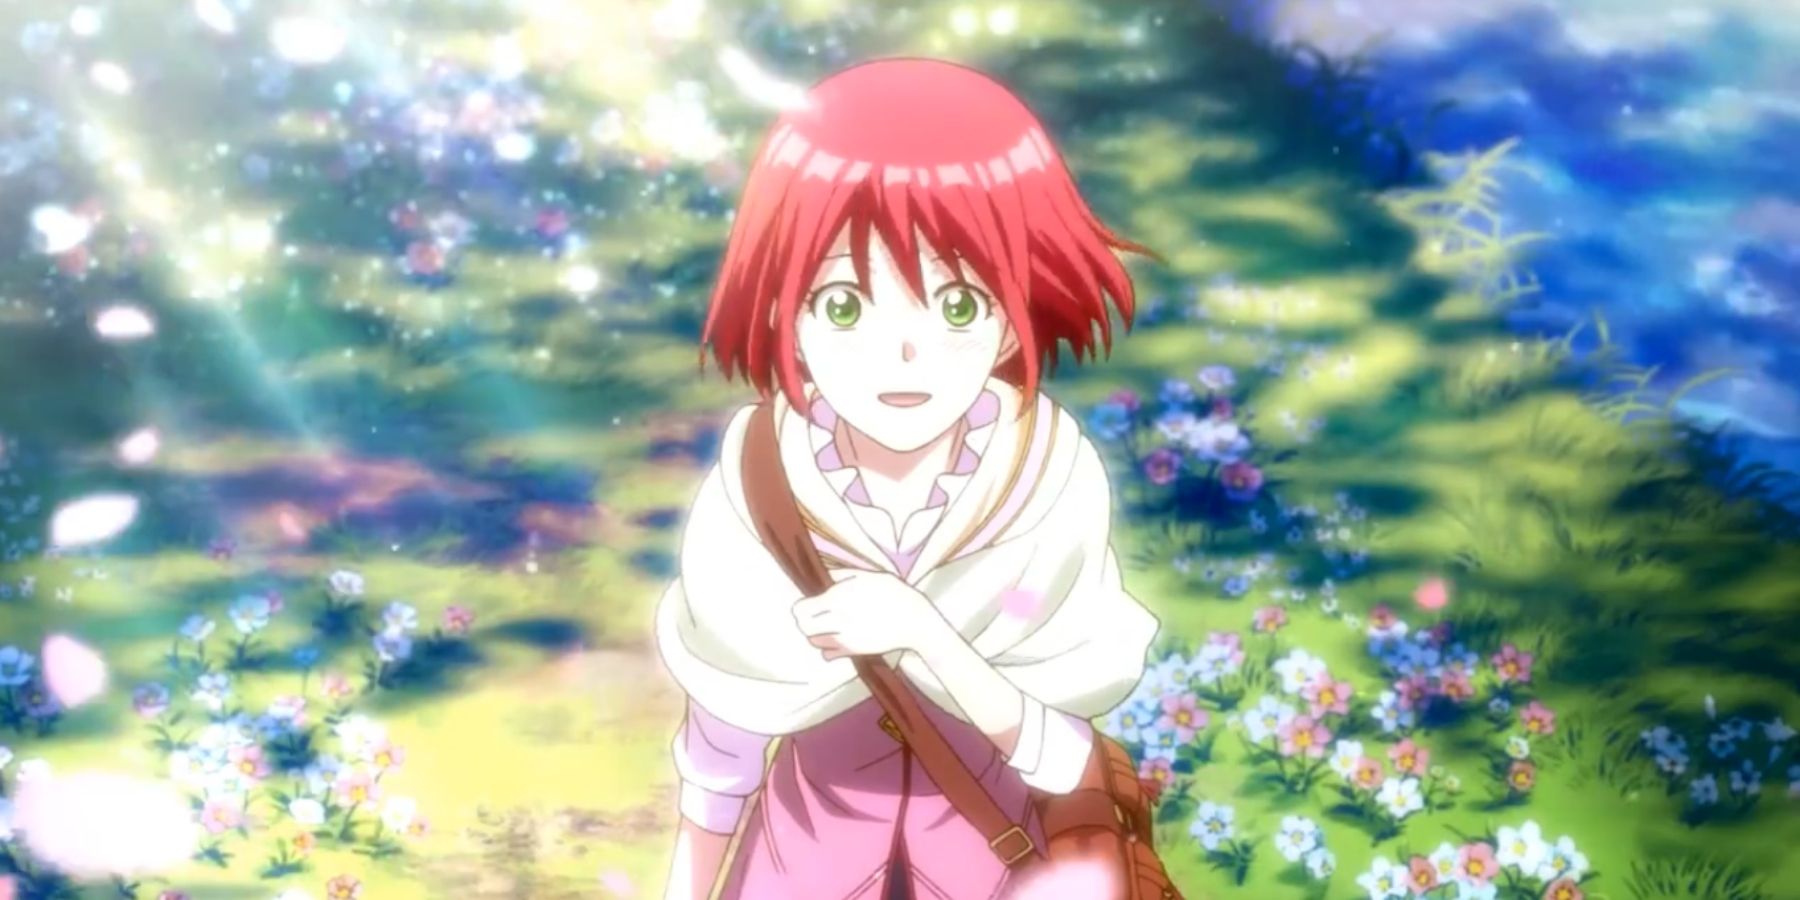 Shirayuki from Snow White With Red Hair